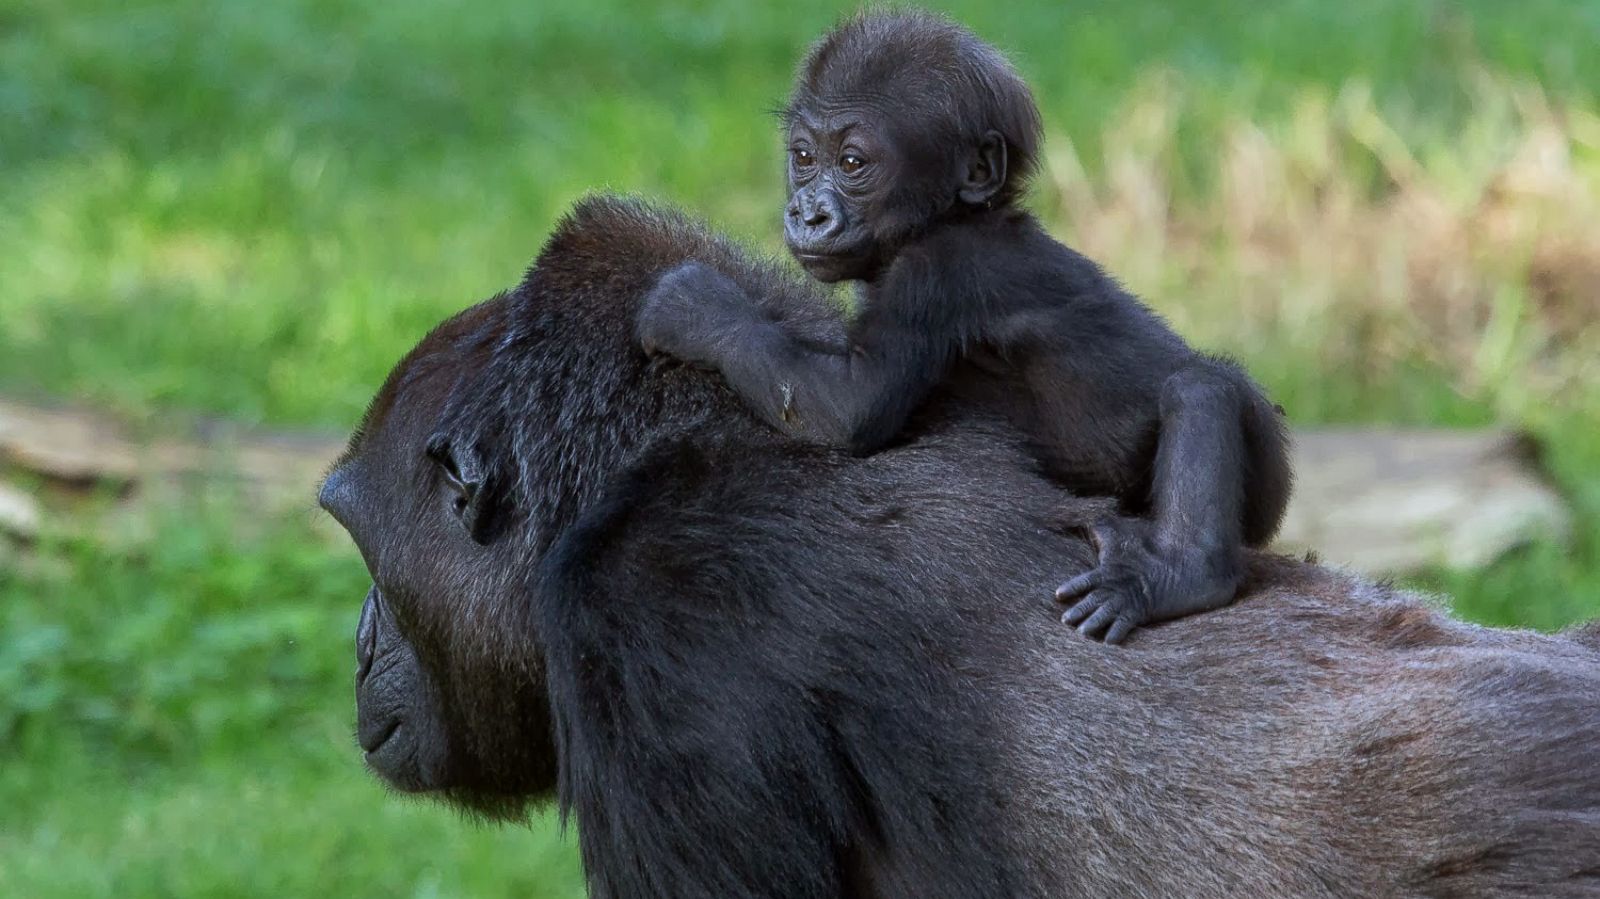 Baby Gorilla Dies in Tragic Zoo Accident - ABC News